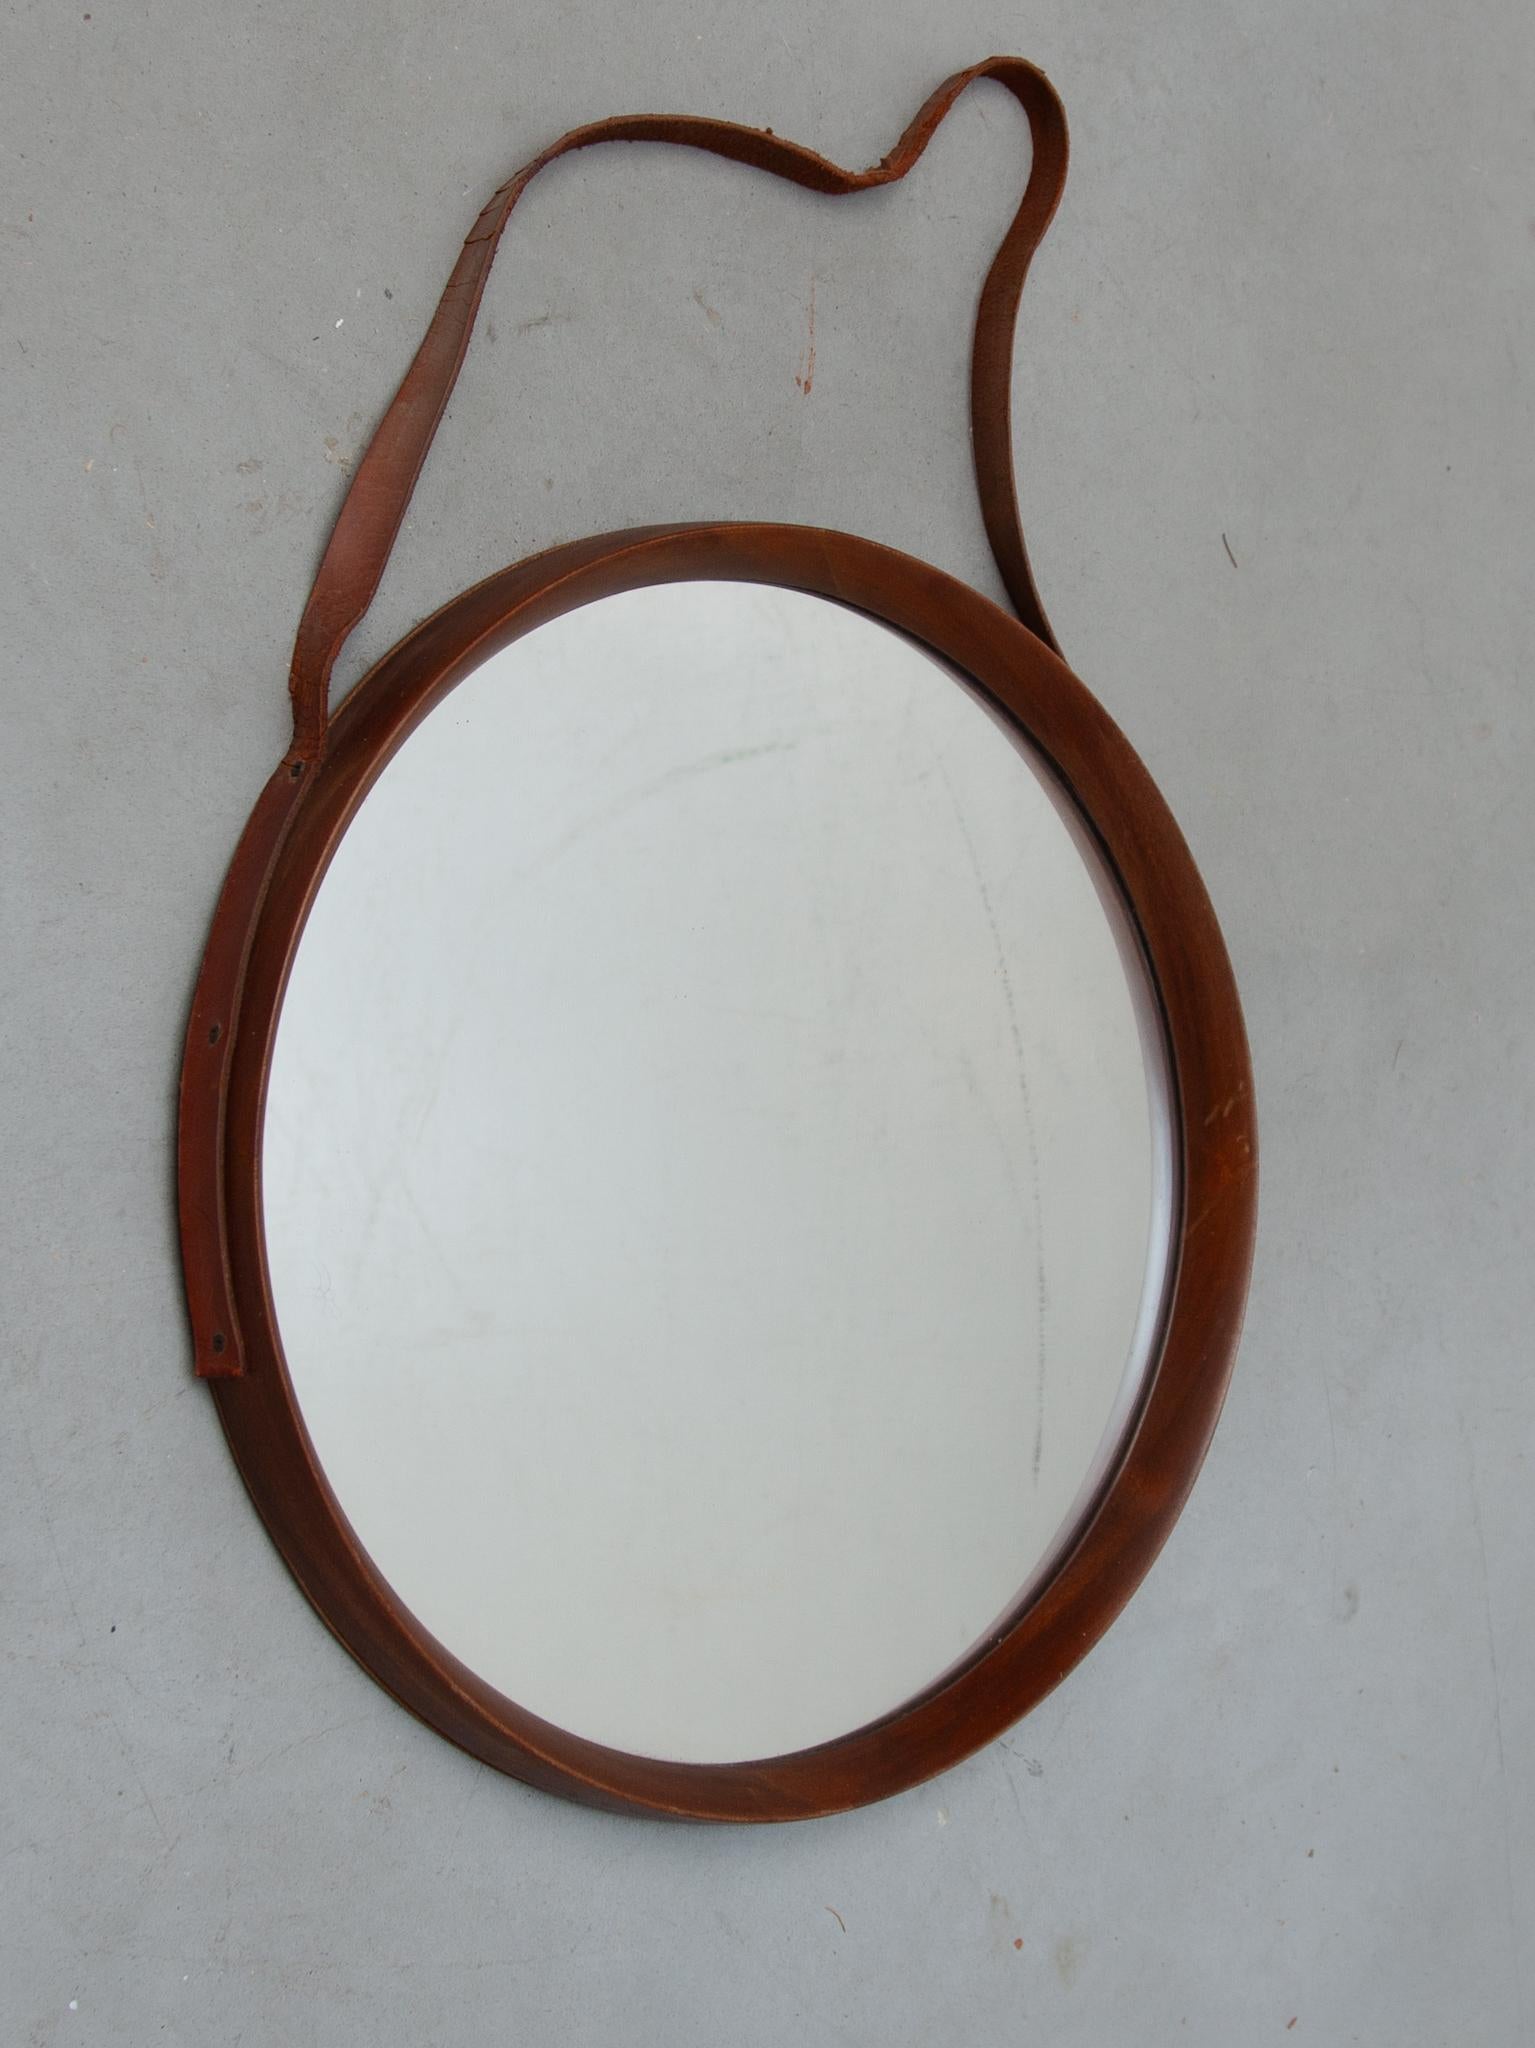 Scandinavian Modern Round Teak Wall Hanging Mirror, 1960s For Sale